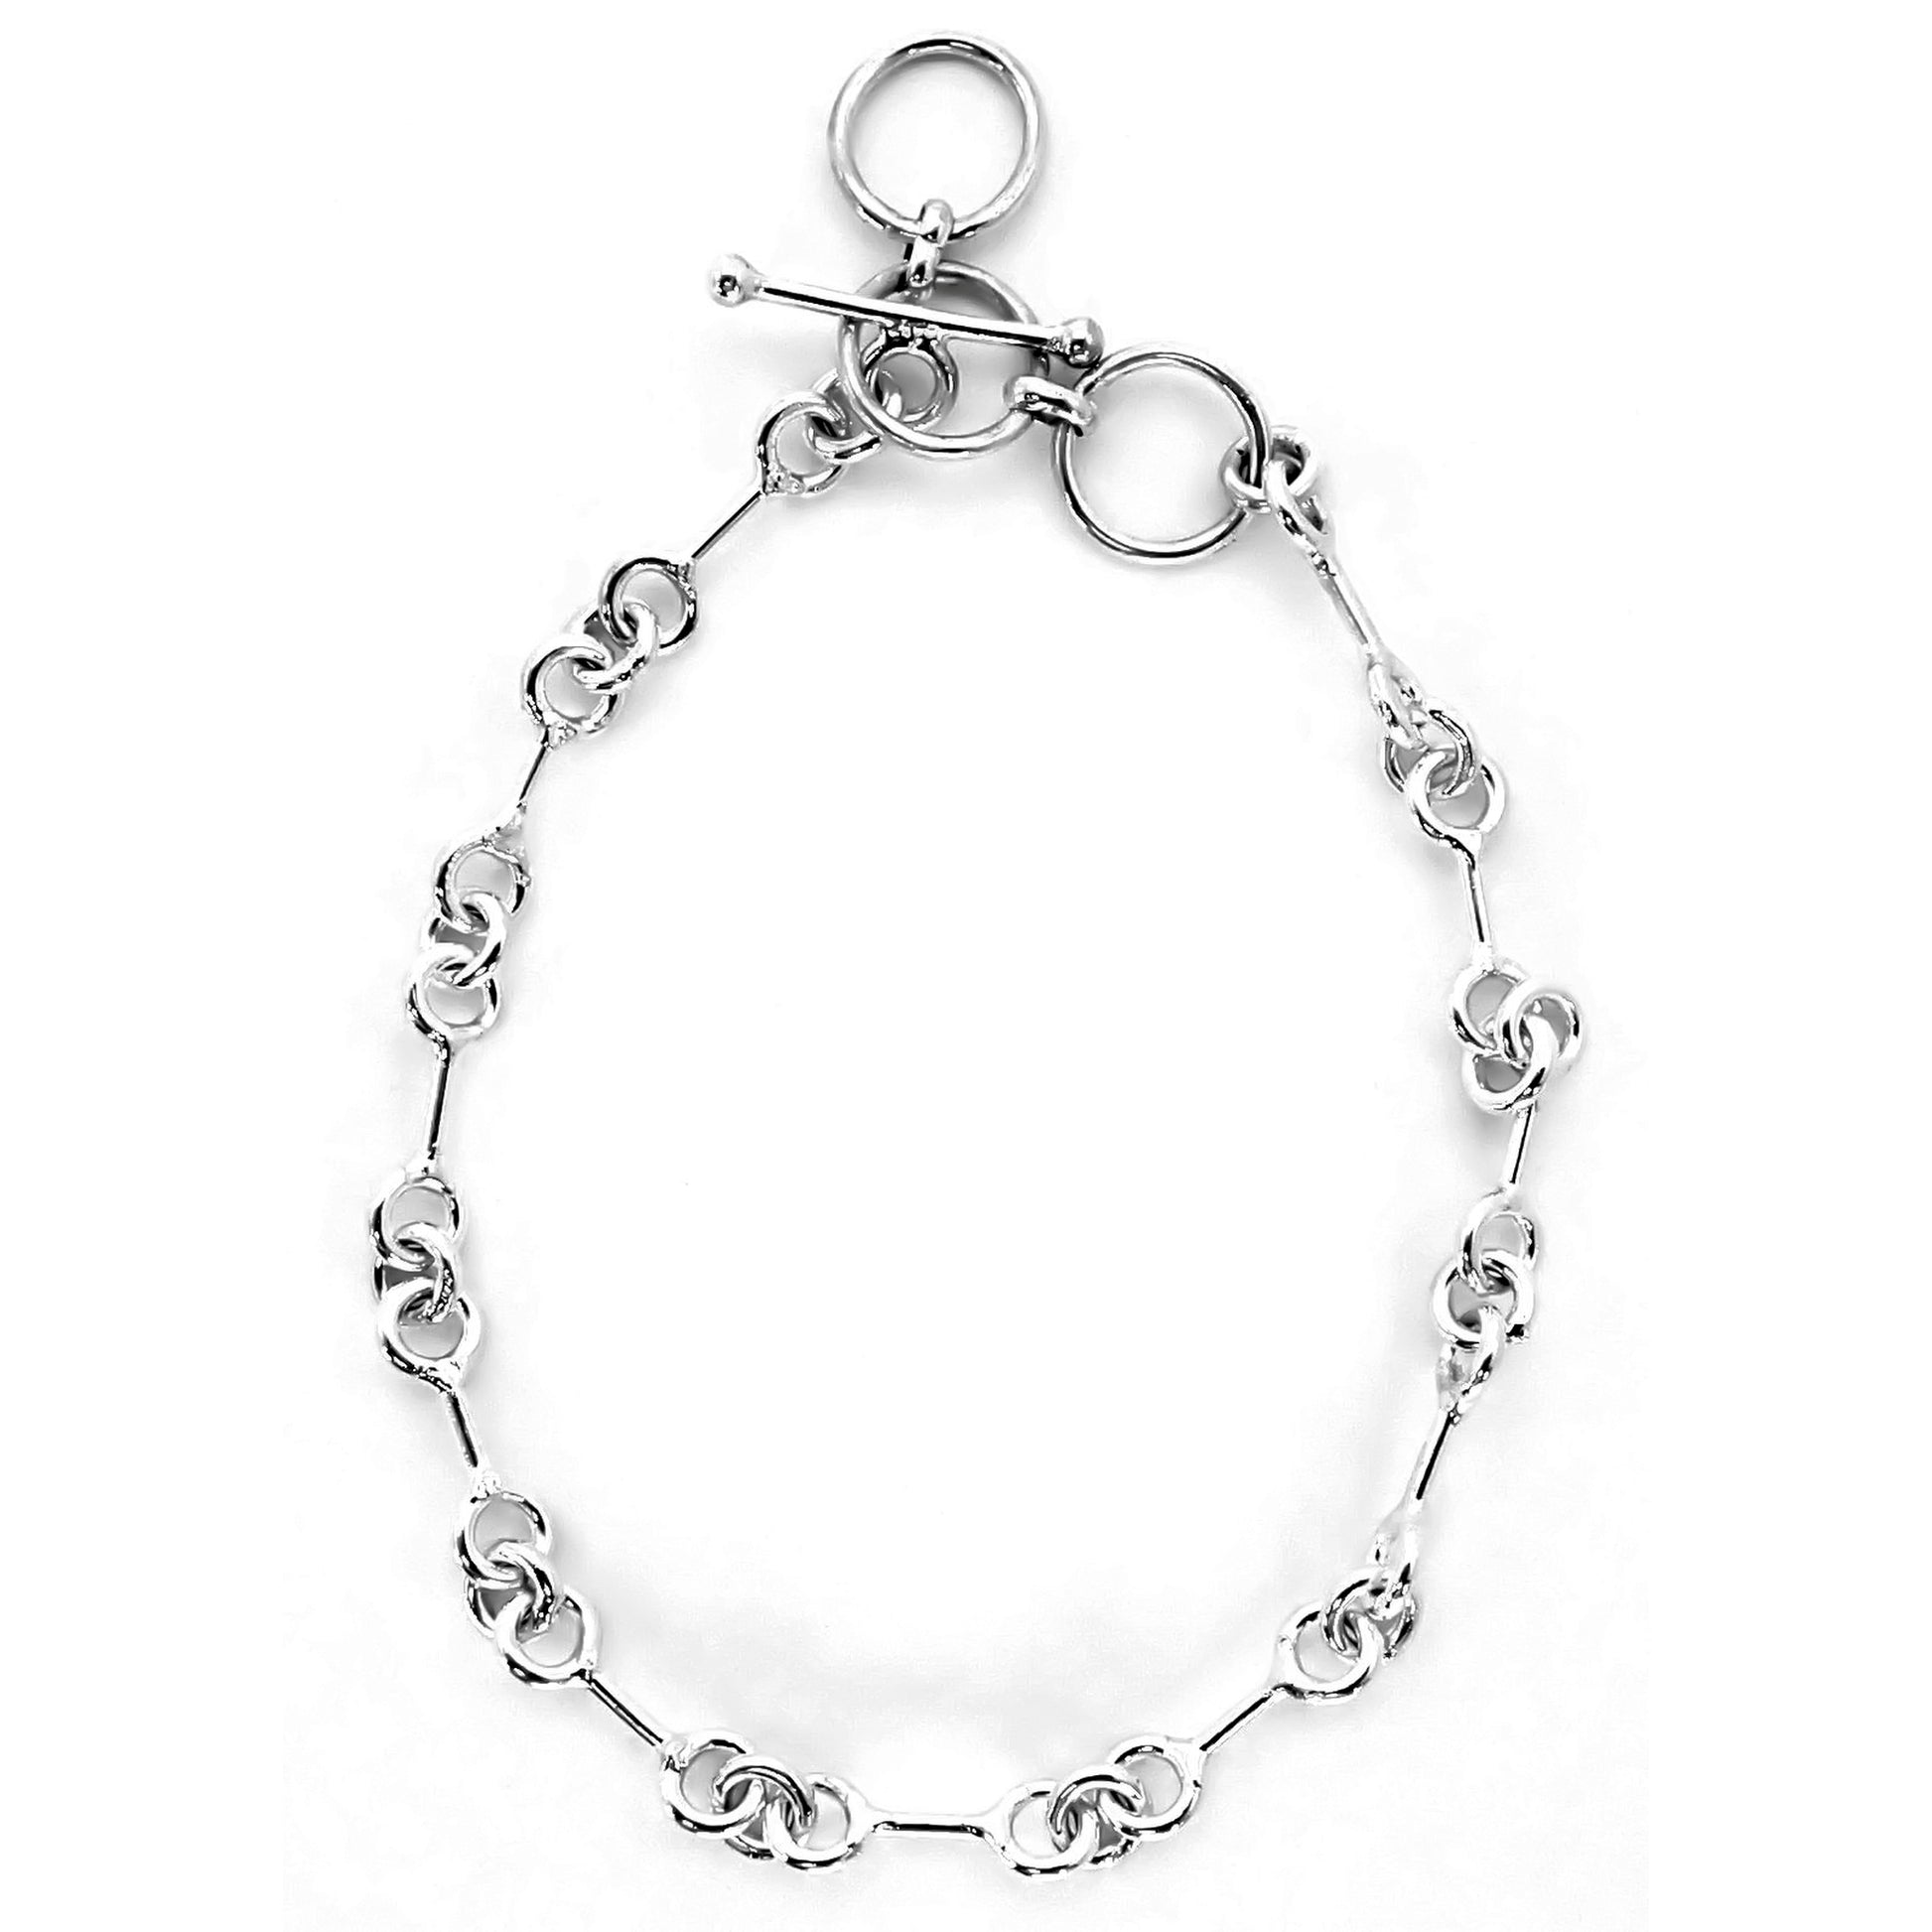 Lightweight silver link bracelet.